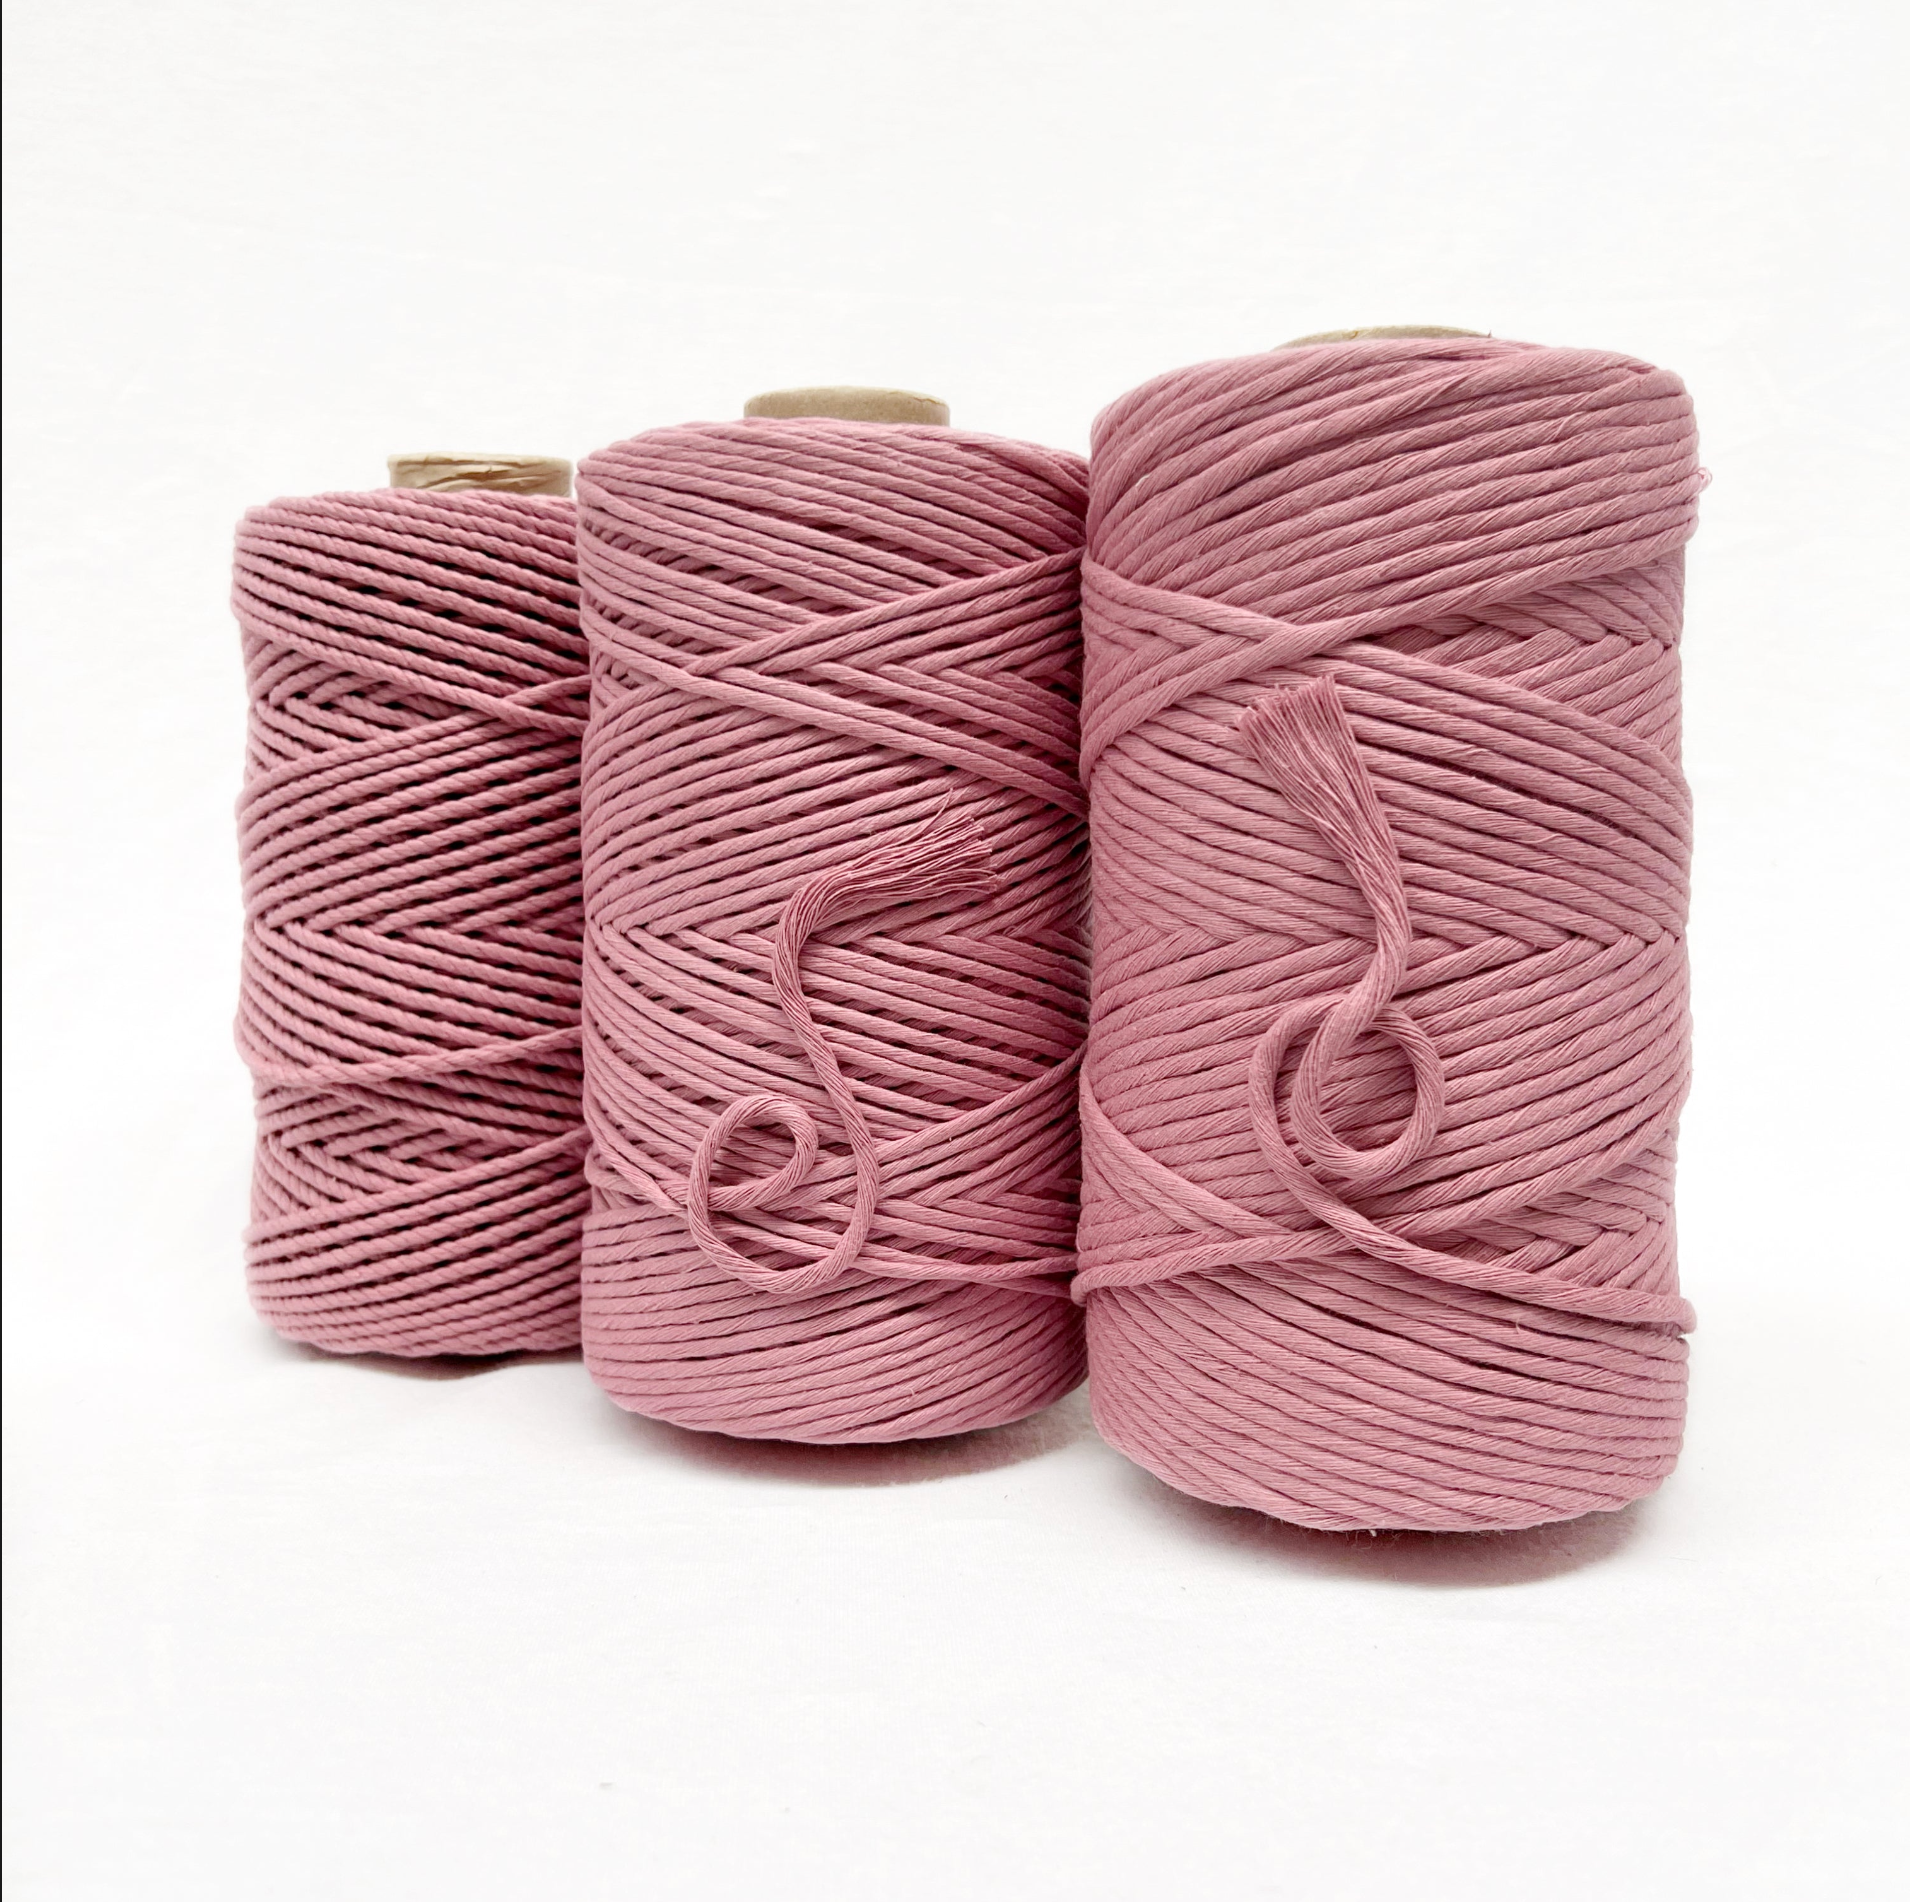 primrose pink 4mm rope on white background